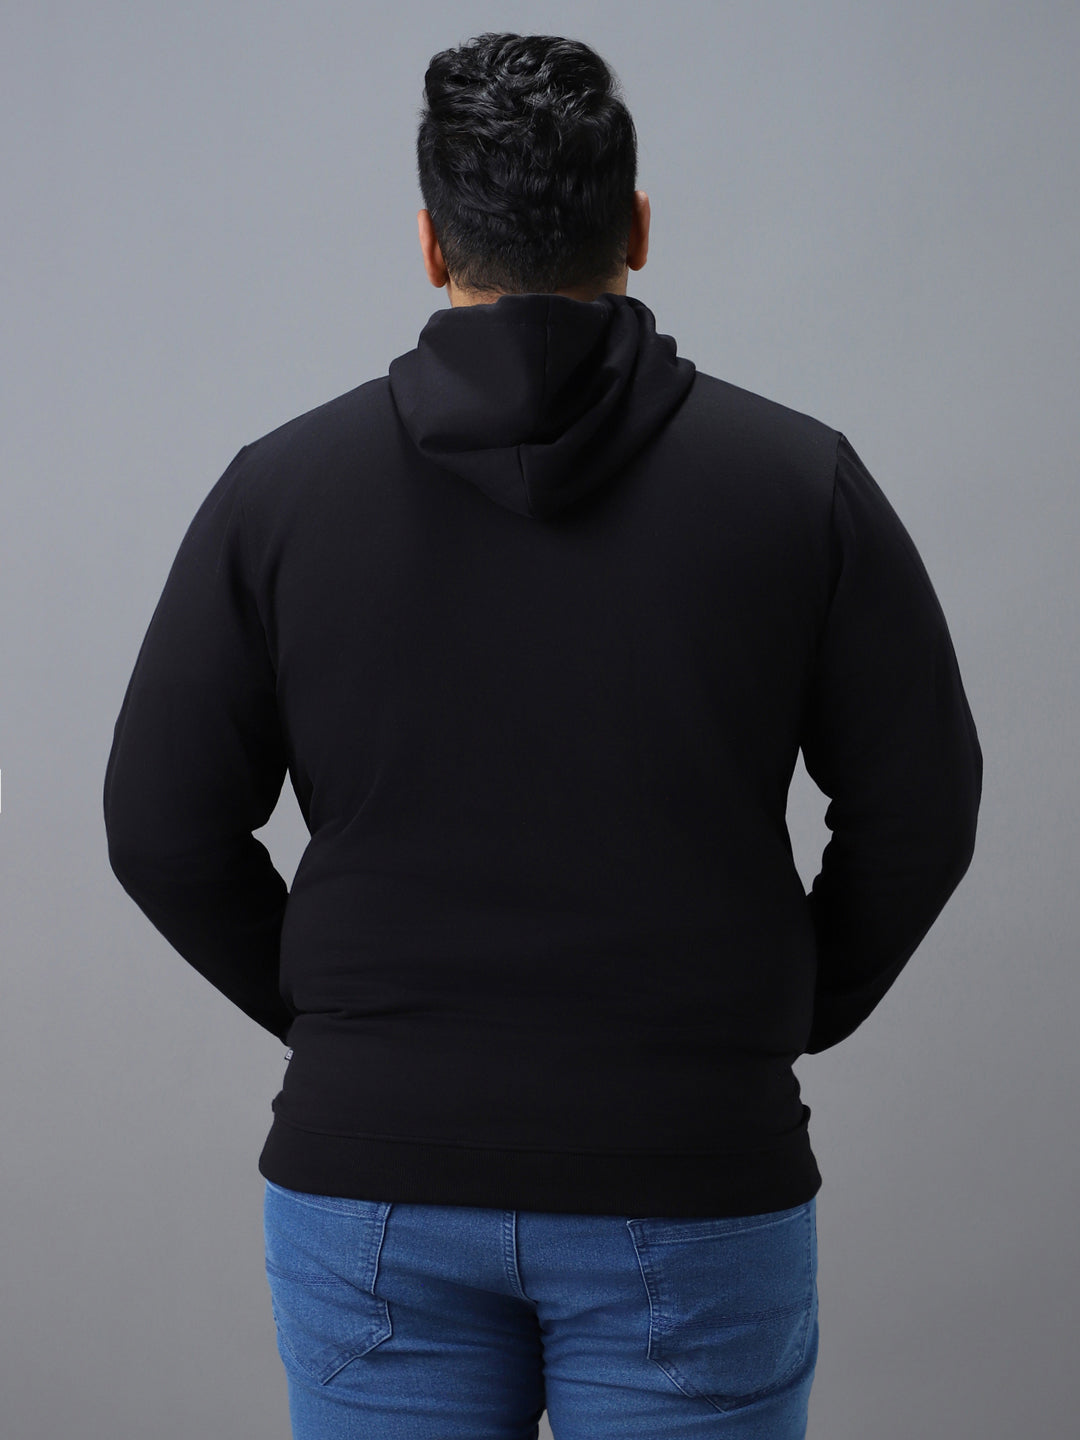 Plus Men's Black Cotton Solid Zippered Hooded Neck Sweatshirt